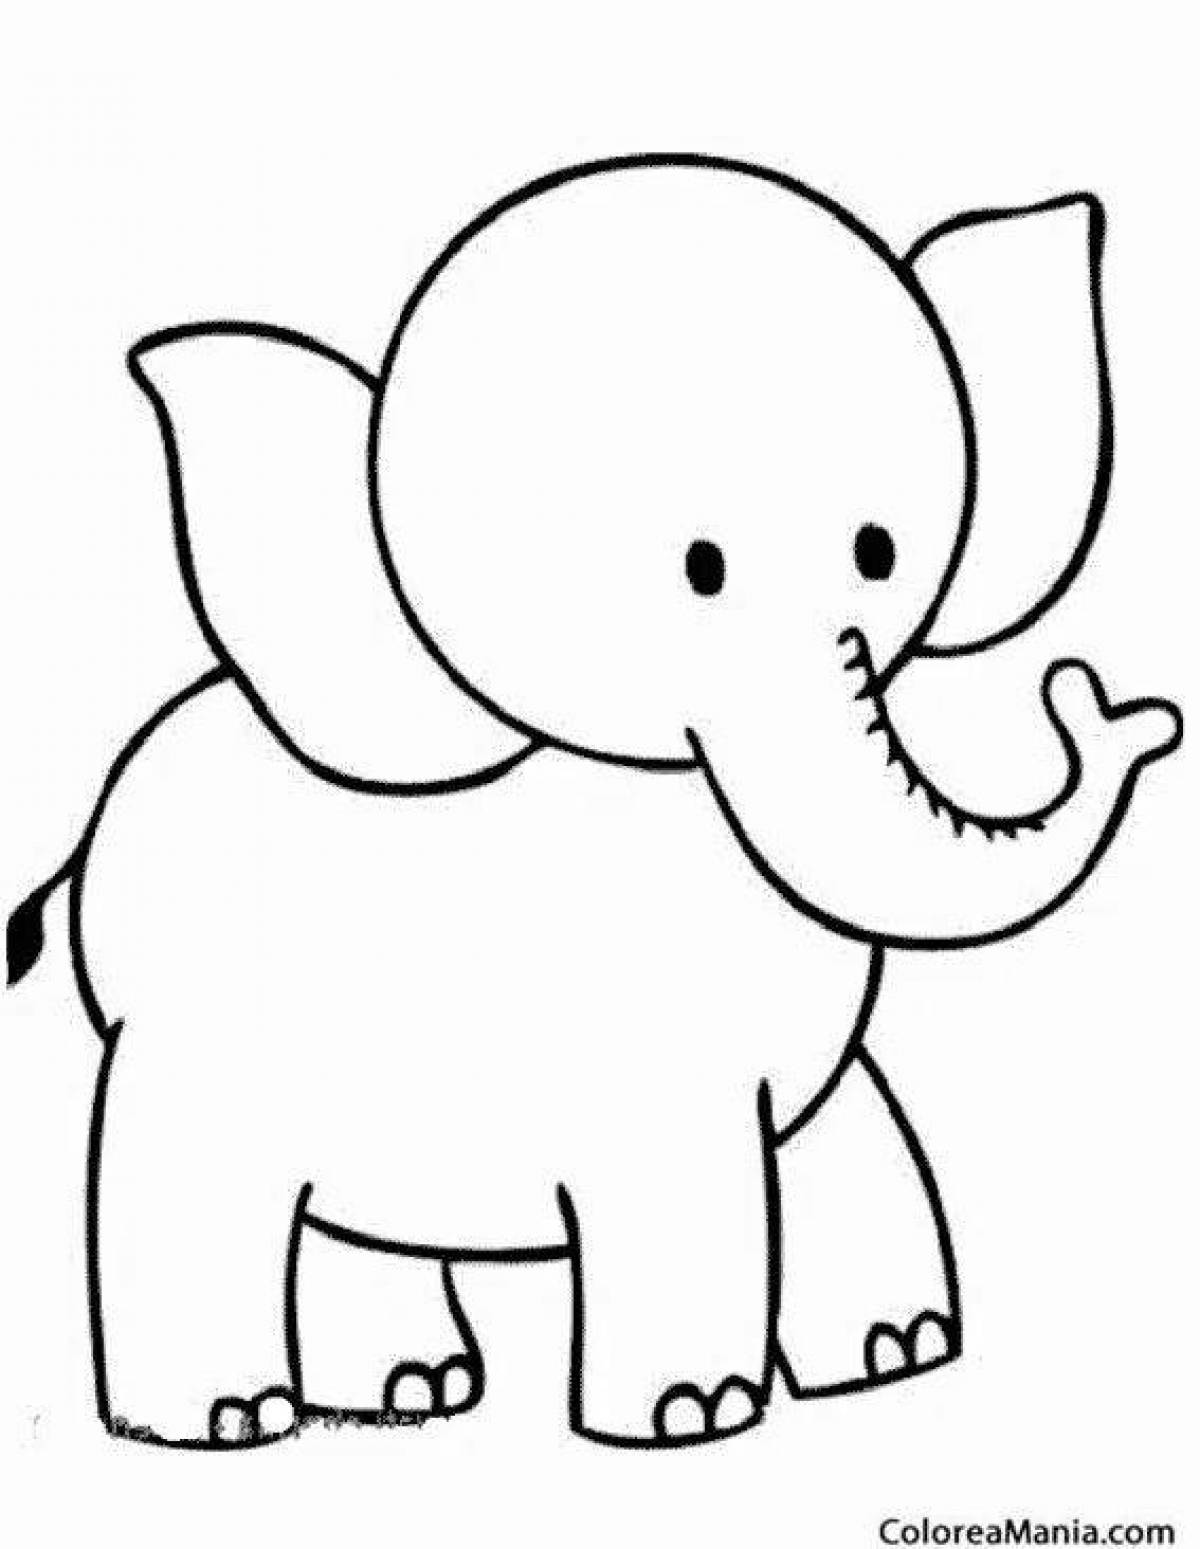 Glitter elephant coloring for kids